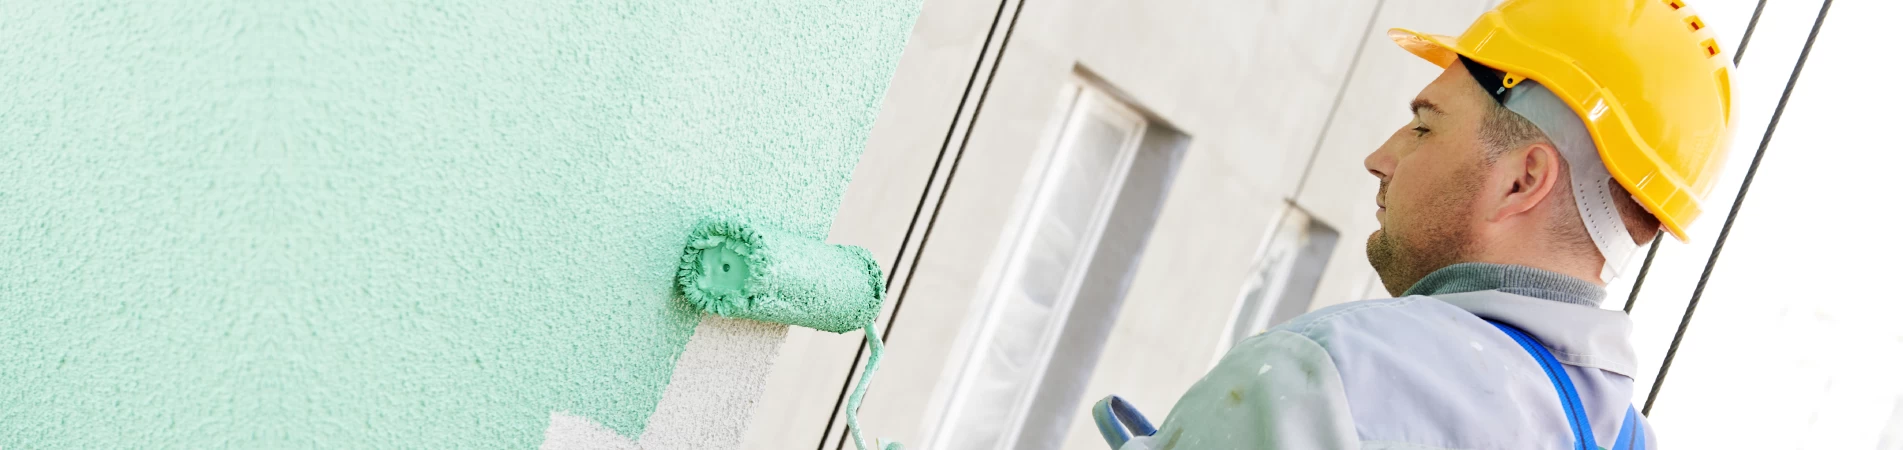 Consideraciones antes de aplicar pintura o texturas en fachada